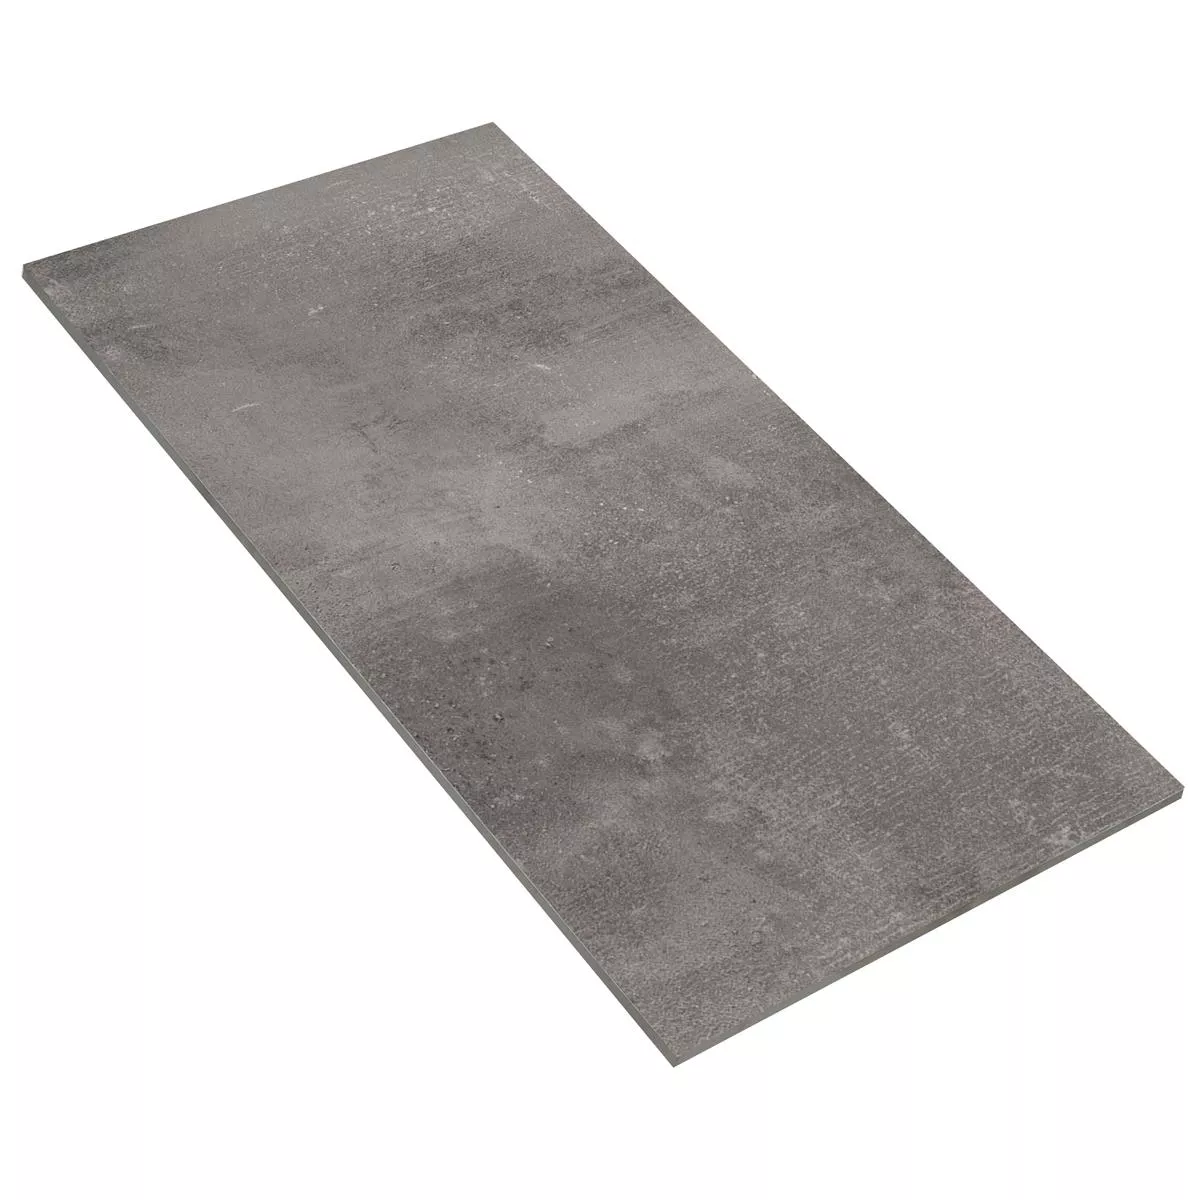 Sample Floor Tiles Castlebrook Stone Optic Grey 30x60cm